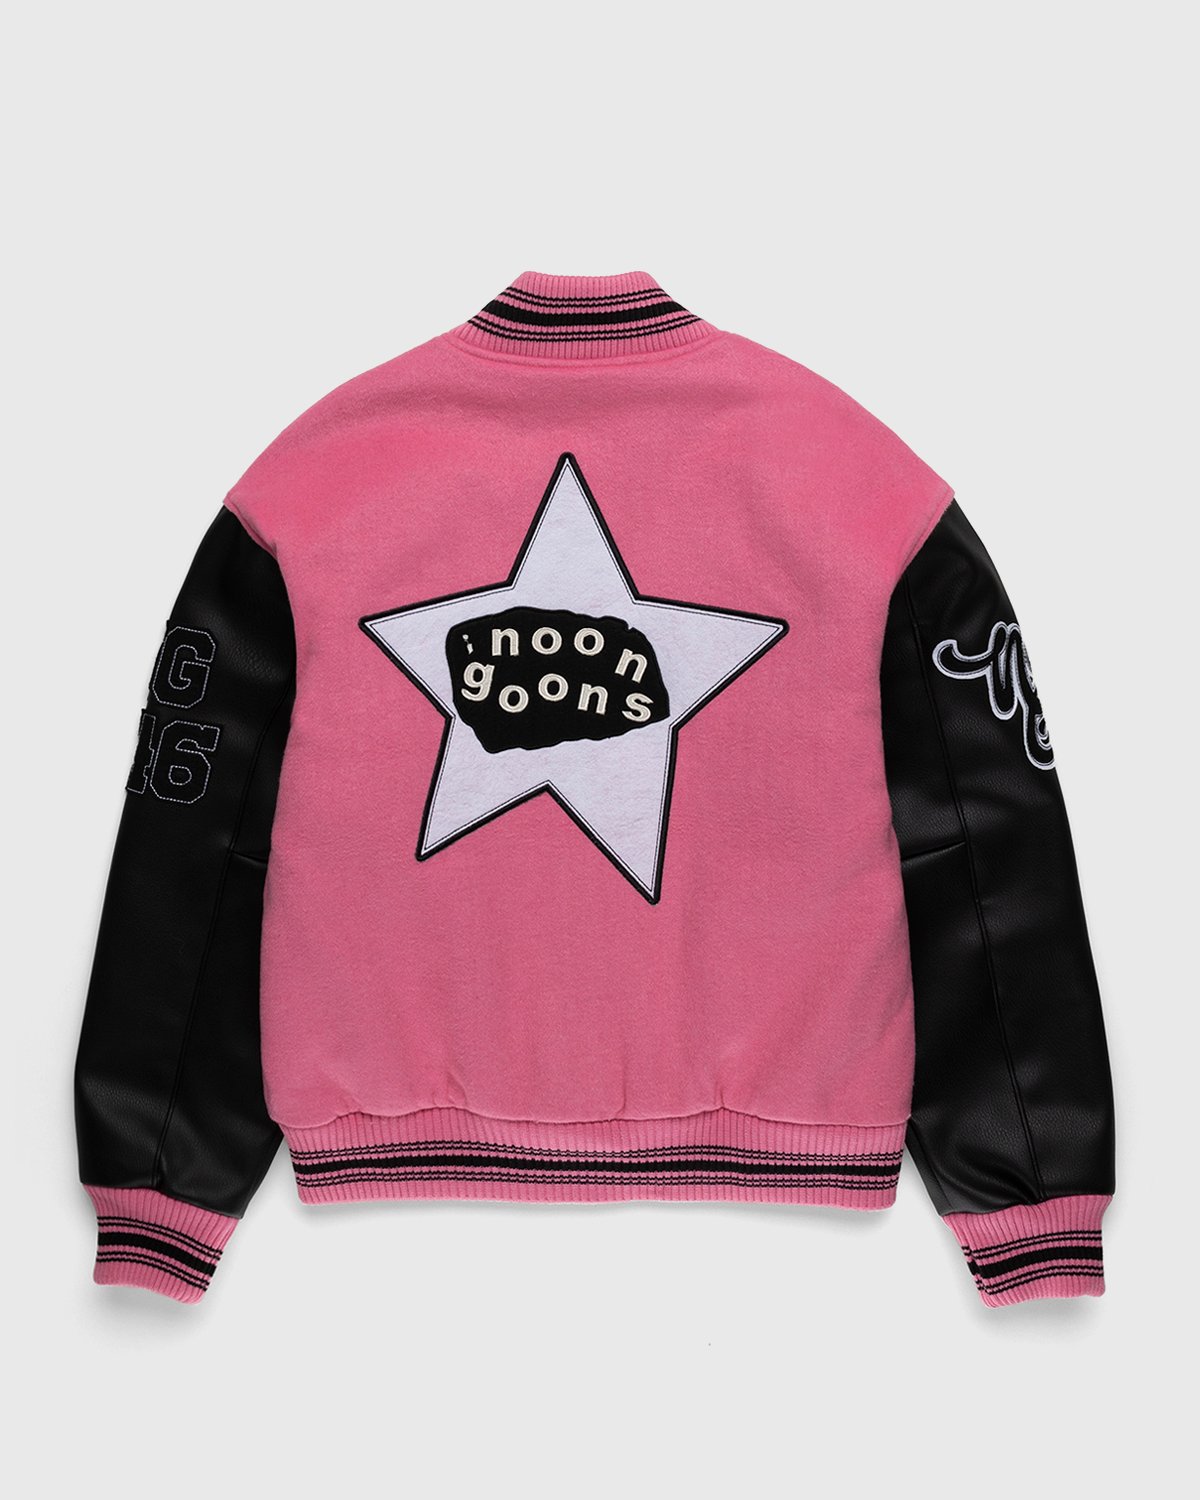 Noon Goons - Hollywood High Varsity Jacket Pink/Black - Clothing - Black - Image 2